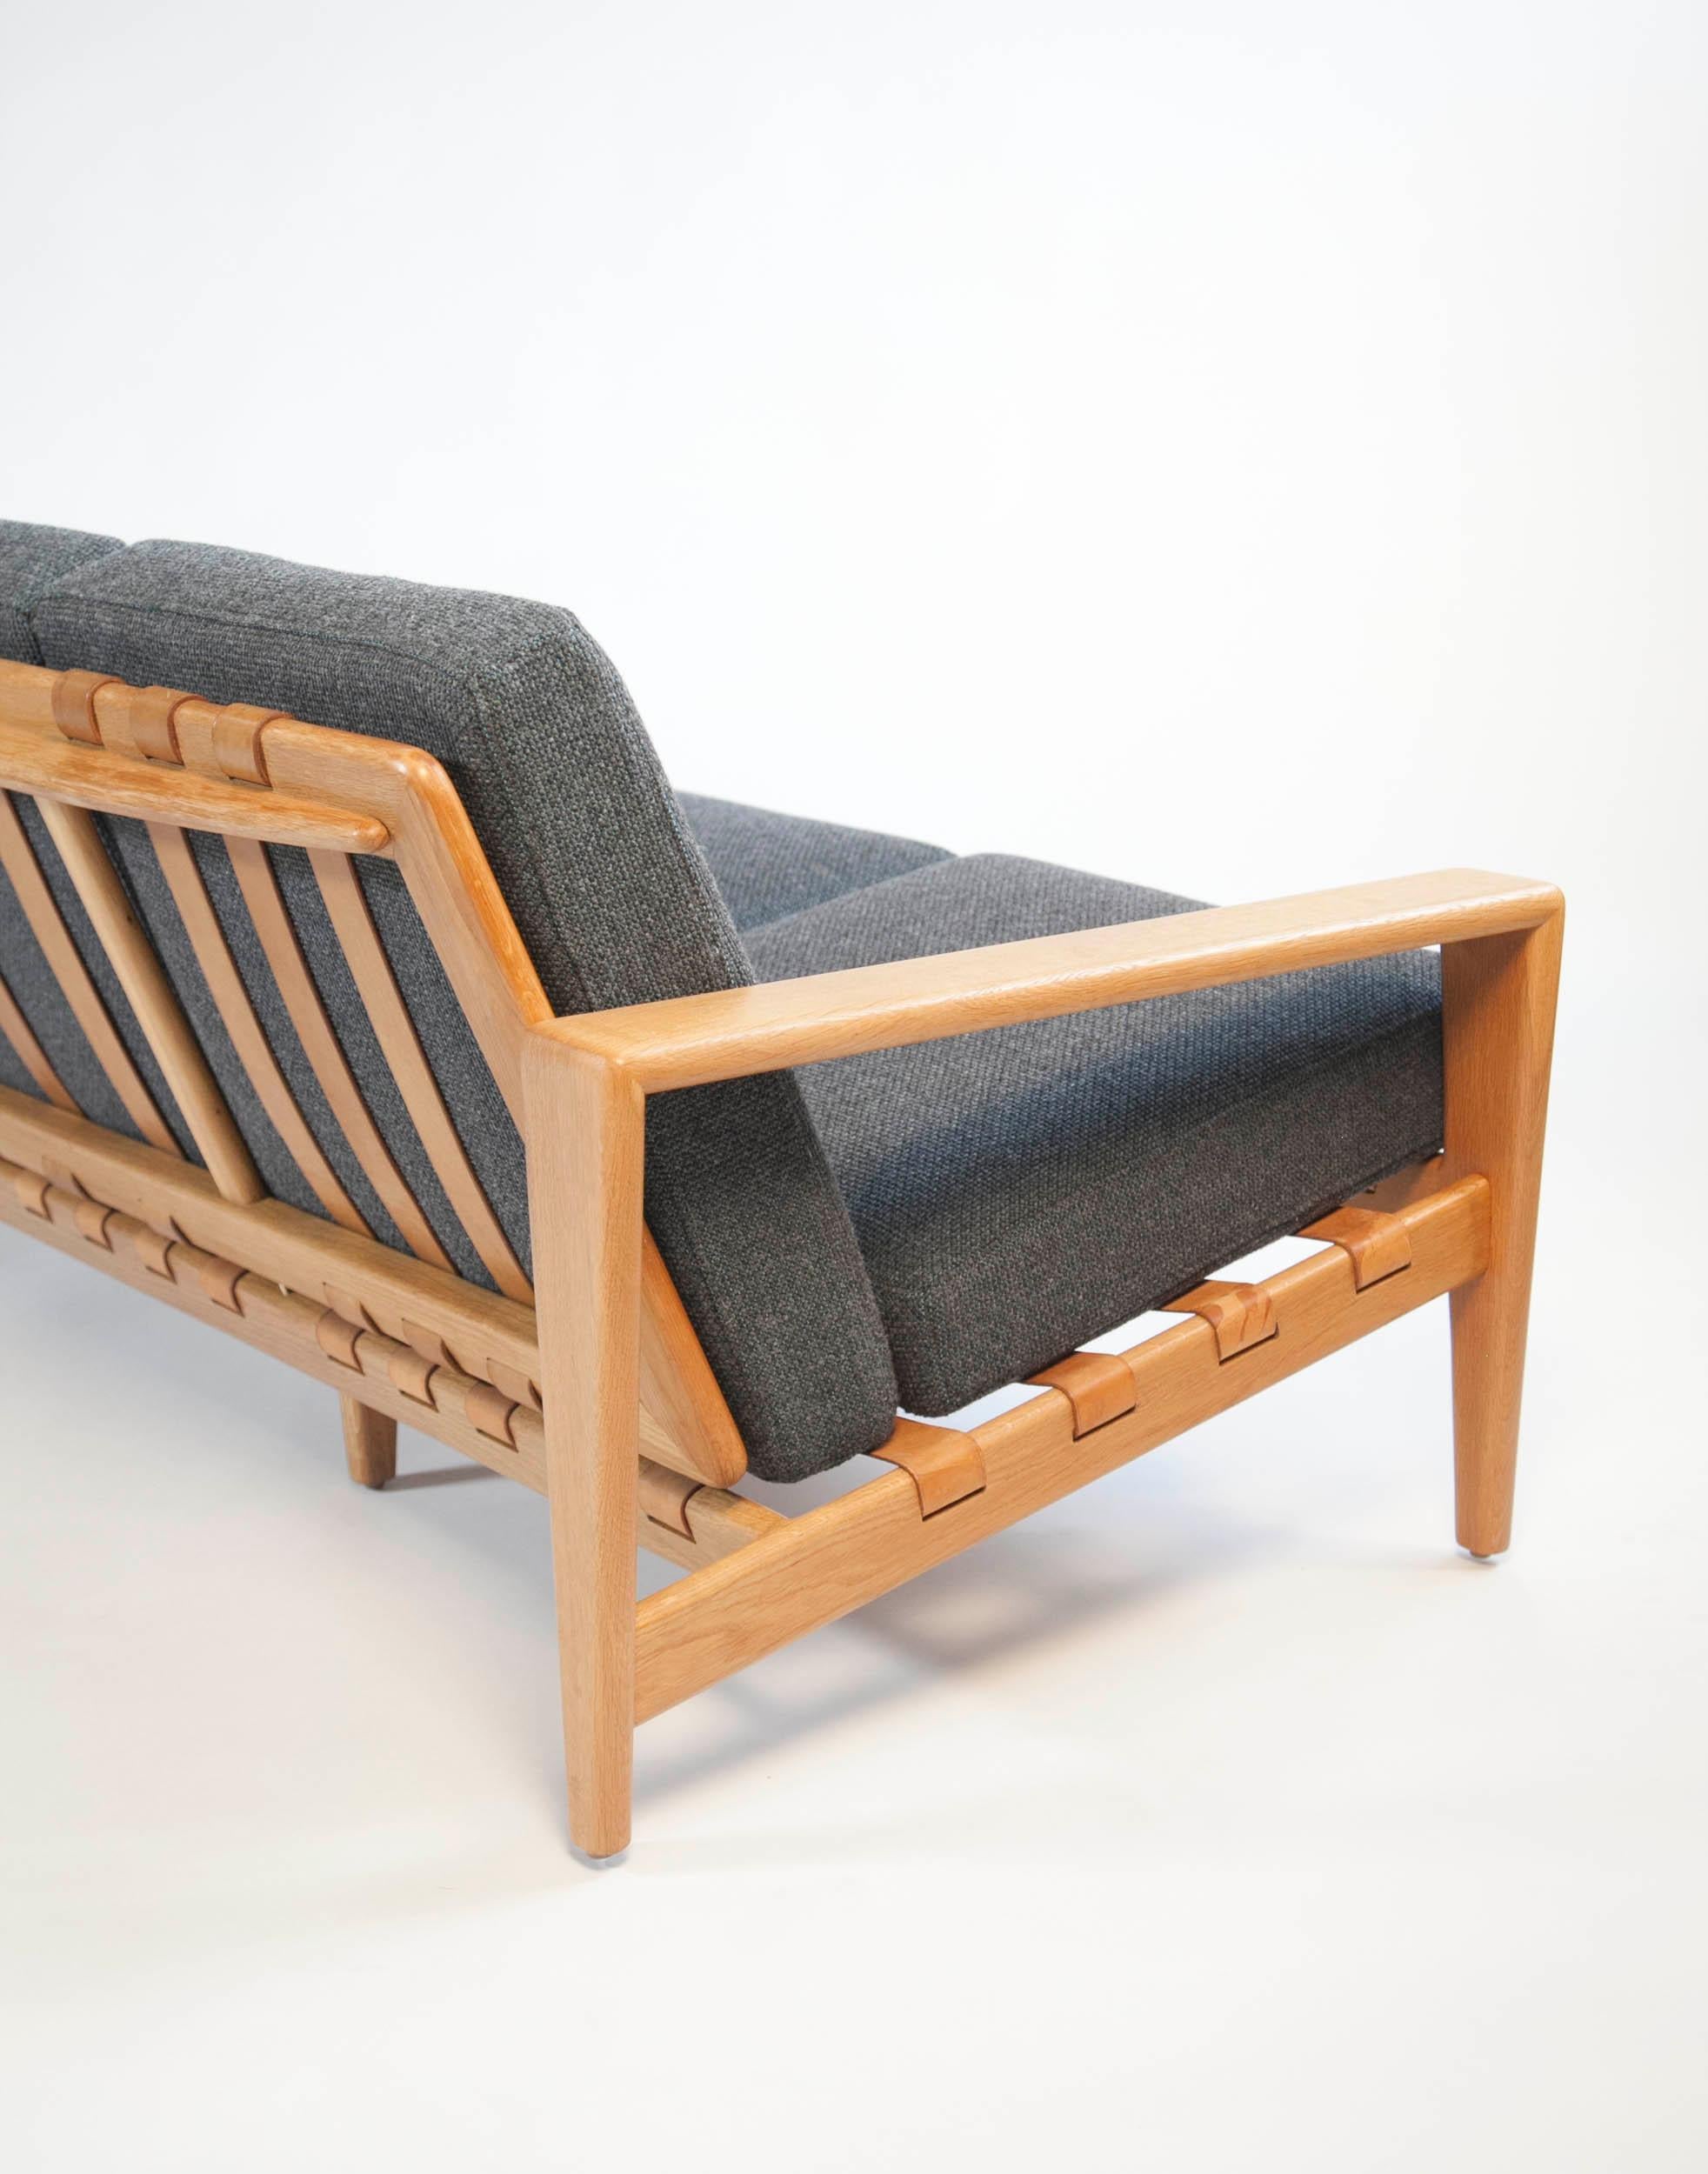 Svante Skogh Four-Seat Bodö Sofa by Seffle Möbelfabrik in Sweden, 1960s For Sale 6